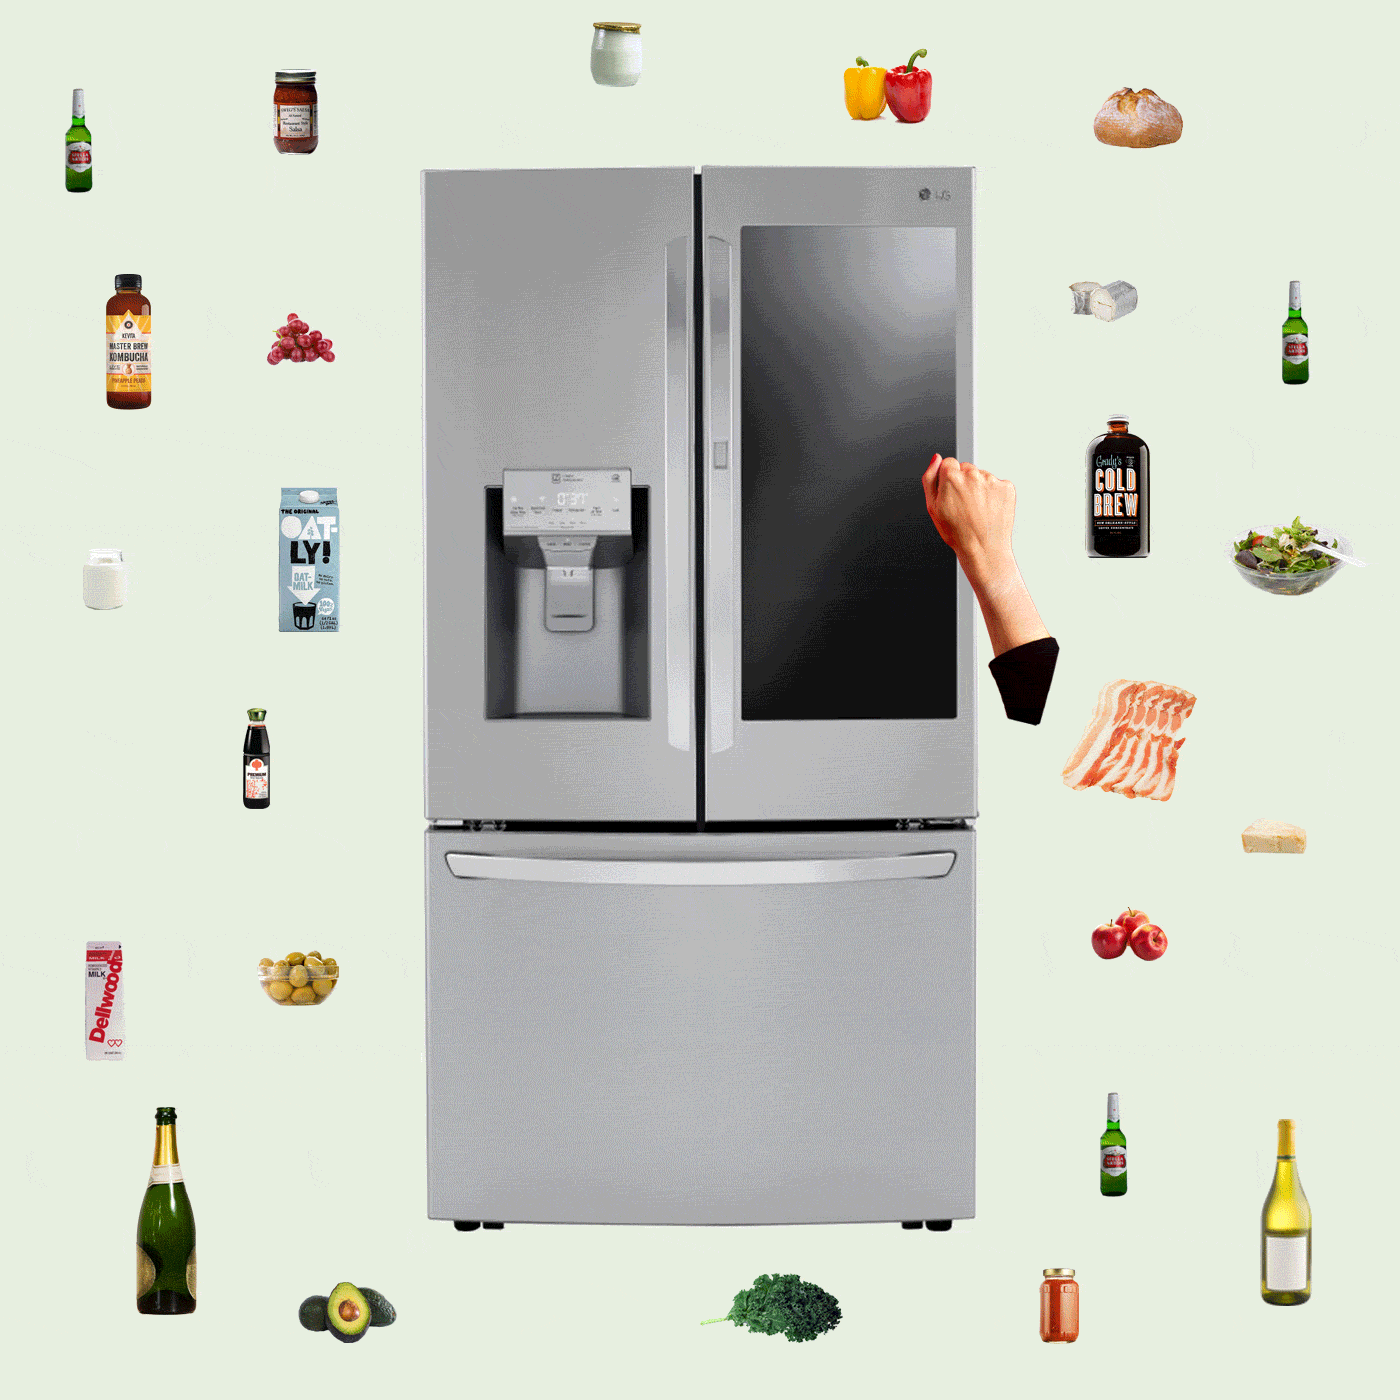 LG fridge motion graphic